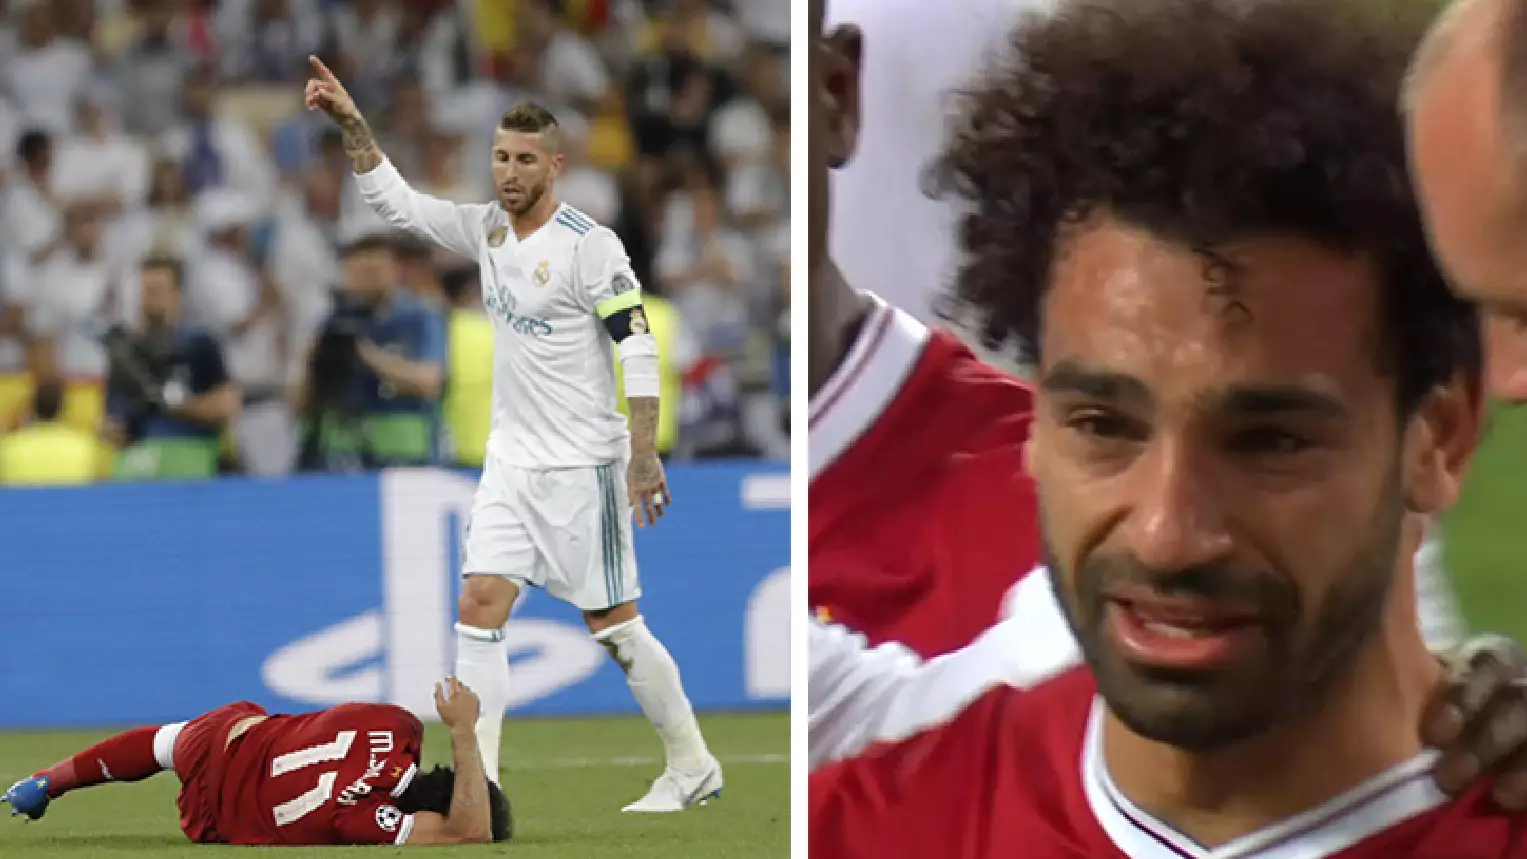 Mohamed Salah Suffers Injury In Champions League Final, Leaves Field In Tears